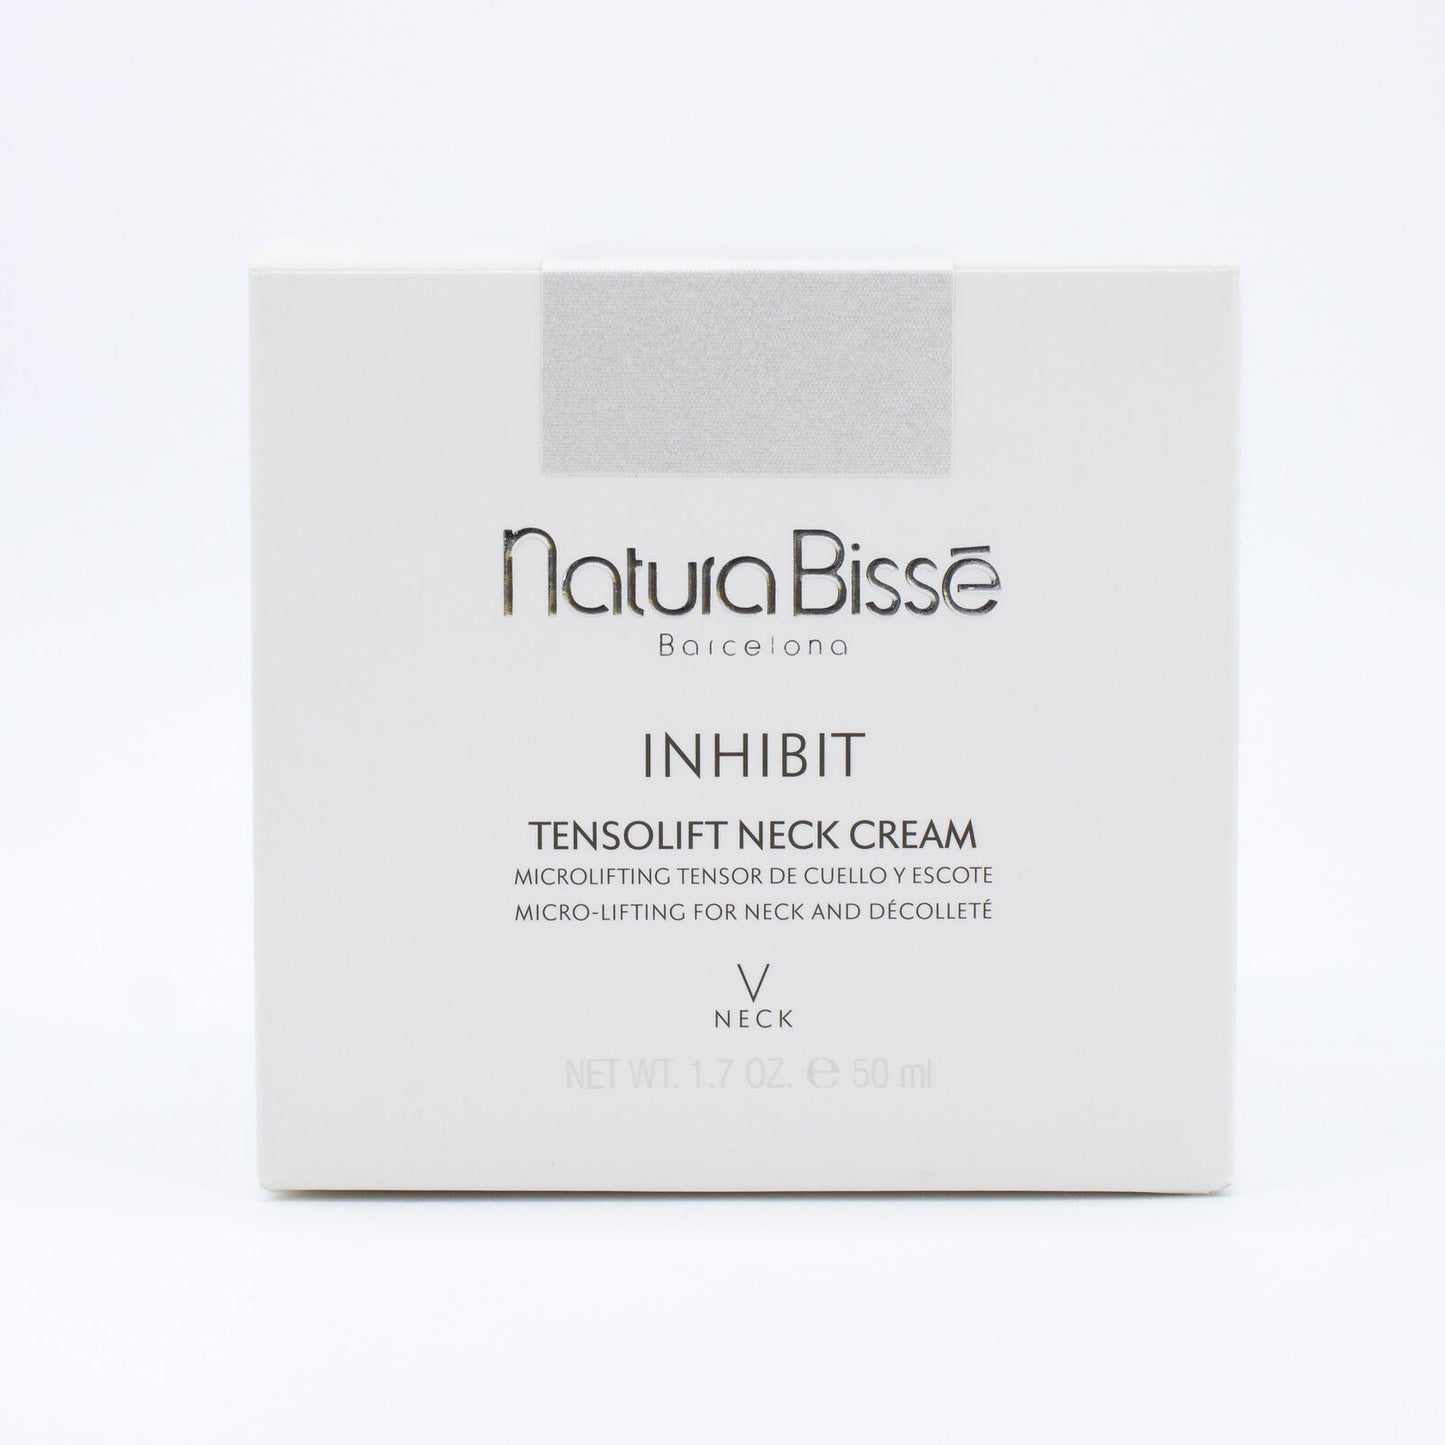 NaturaBisse Inhibit Tensolift Neck Cream 1.7oz - Imperfect Box